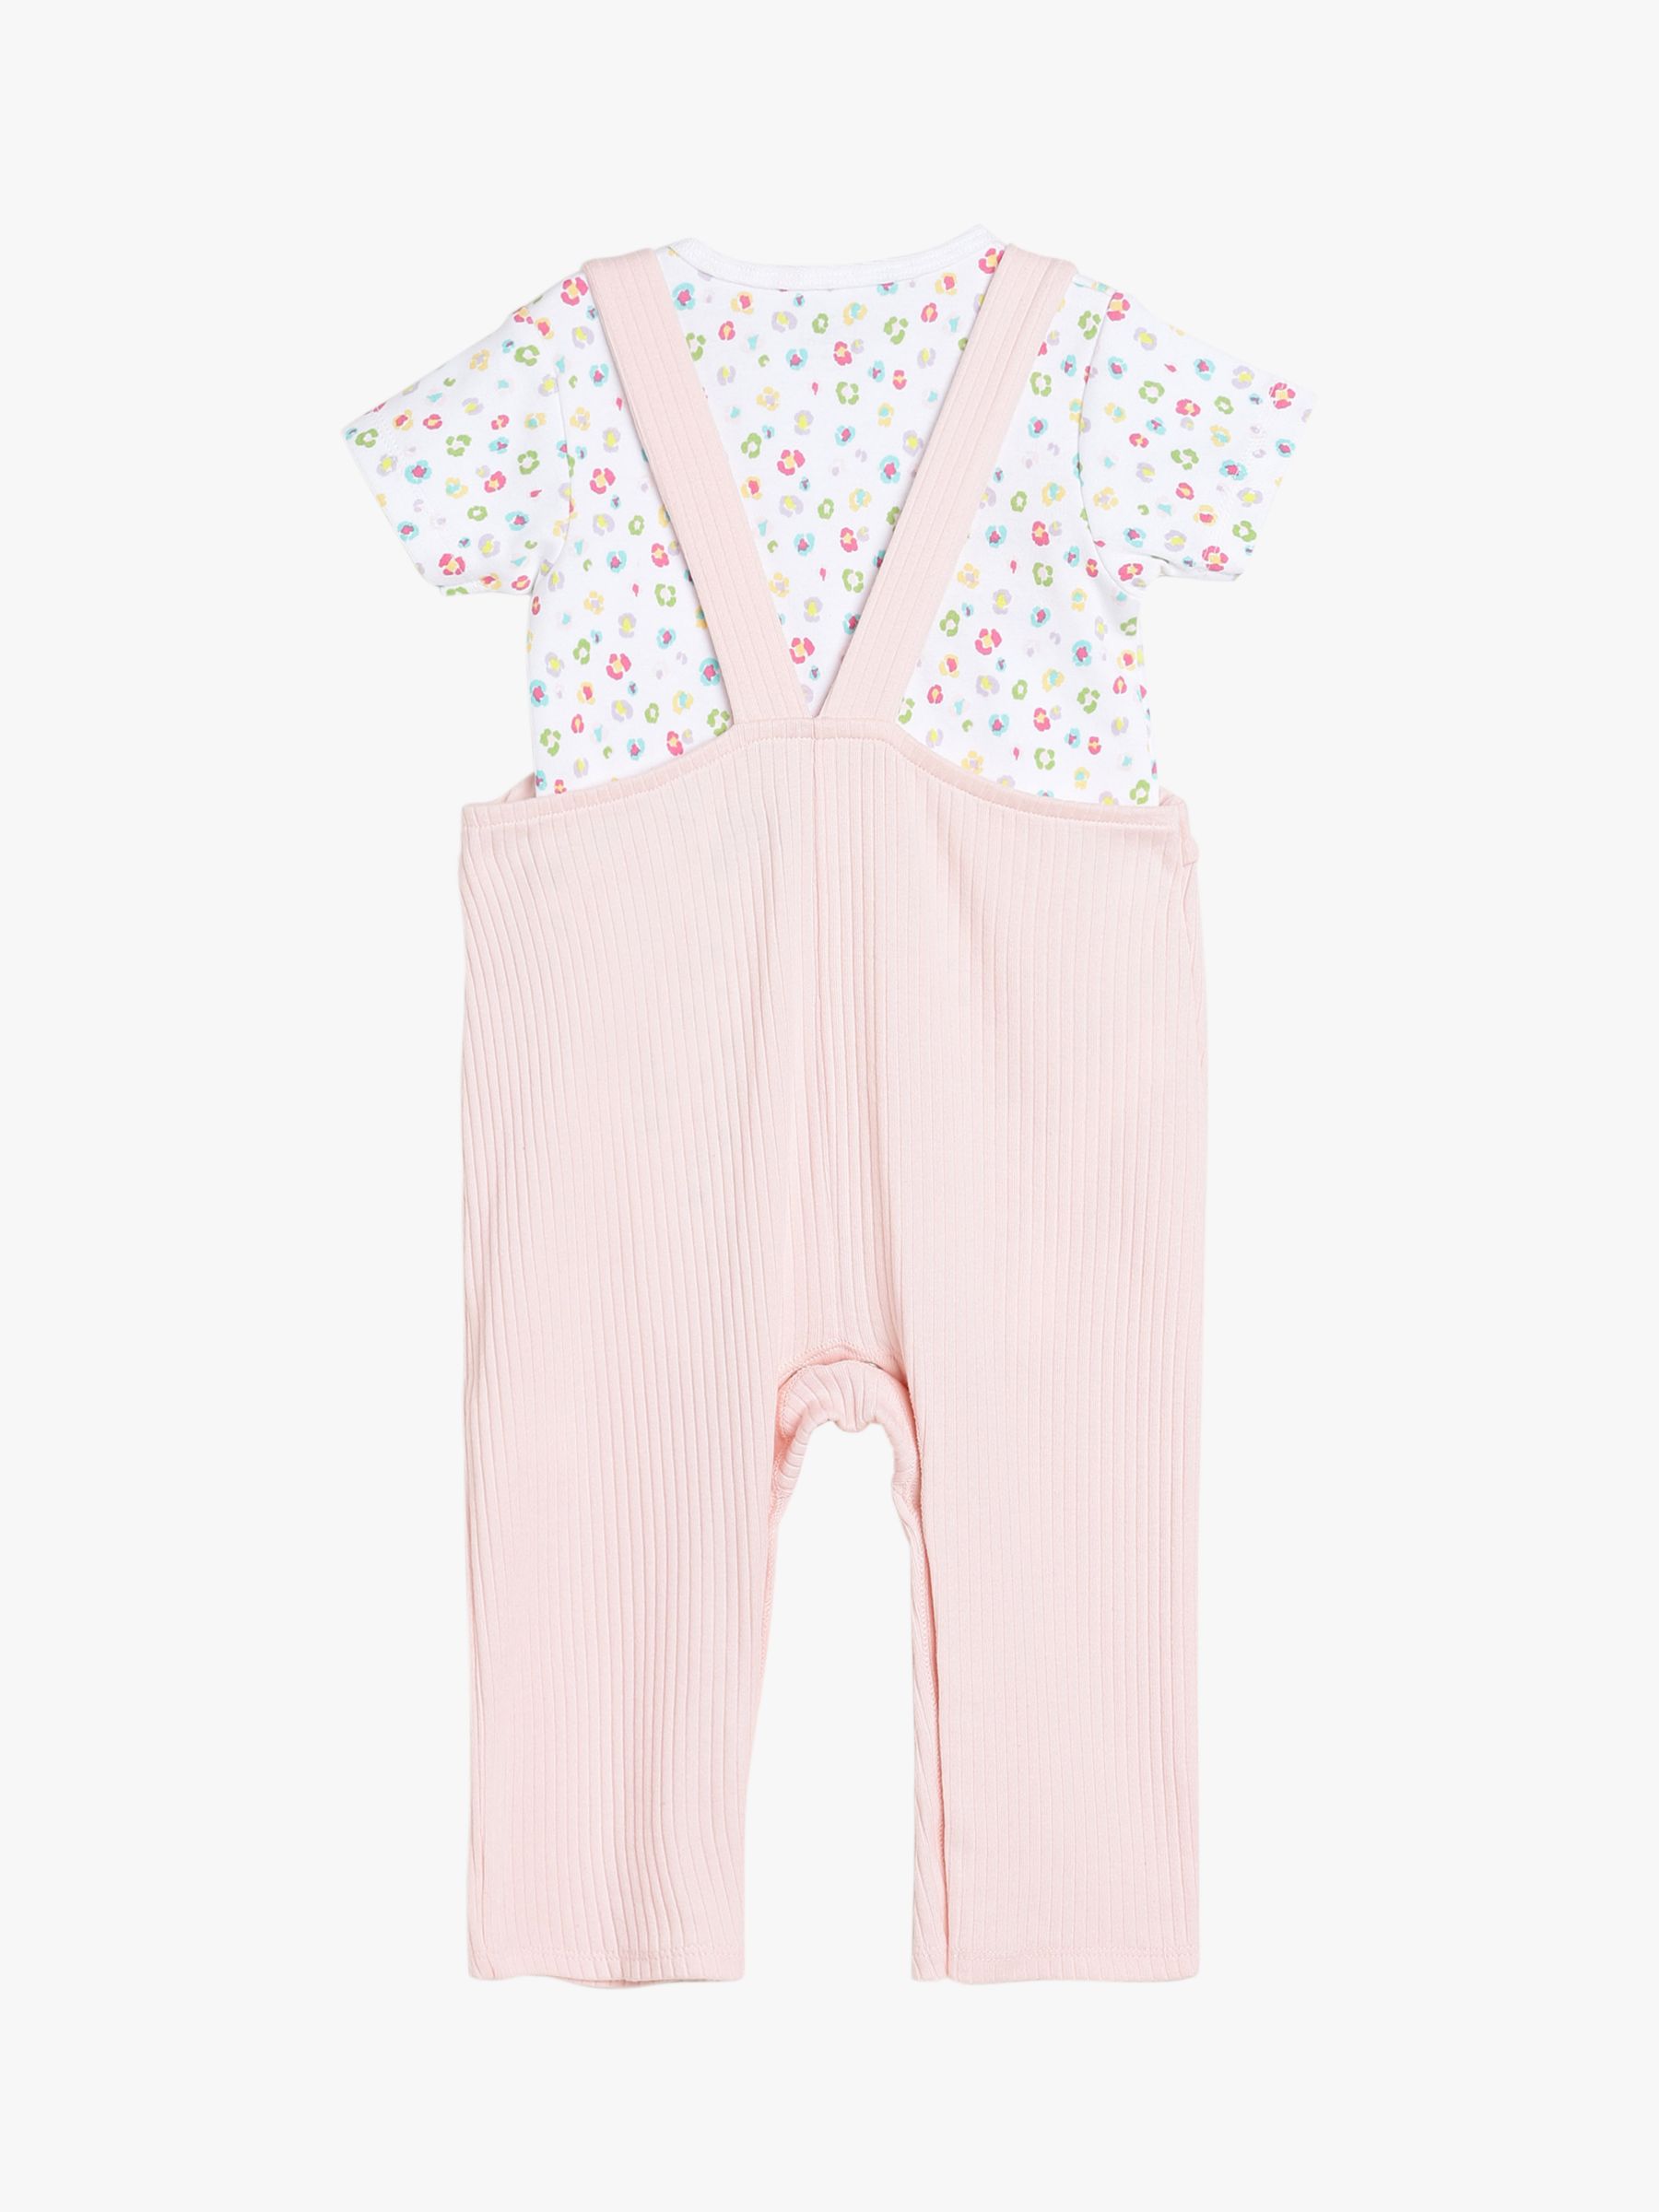 Mini Cuddles Baby Floral Bodysuit & Tropical Bird Graphic Dungarees Set, Pink/Multi, 3-6 months